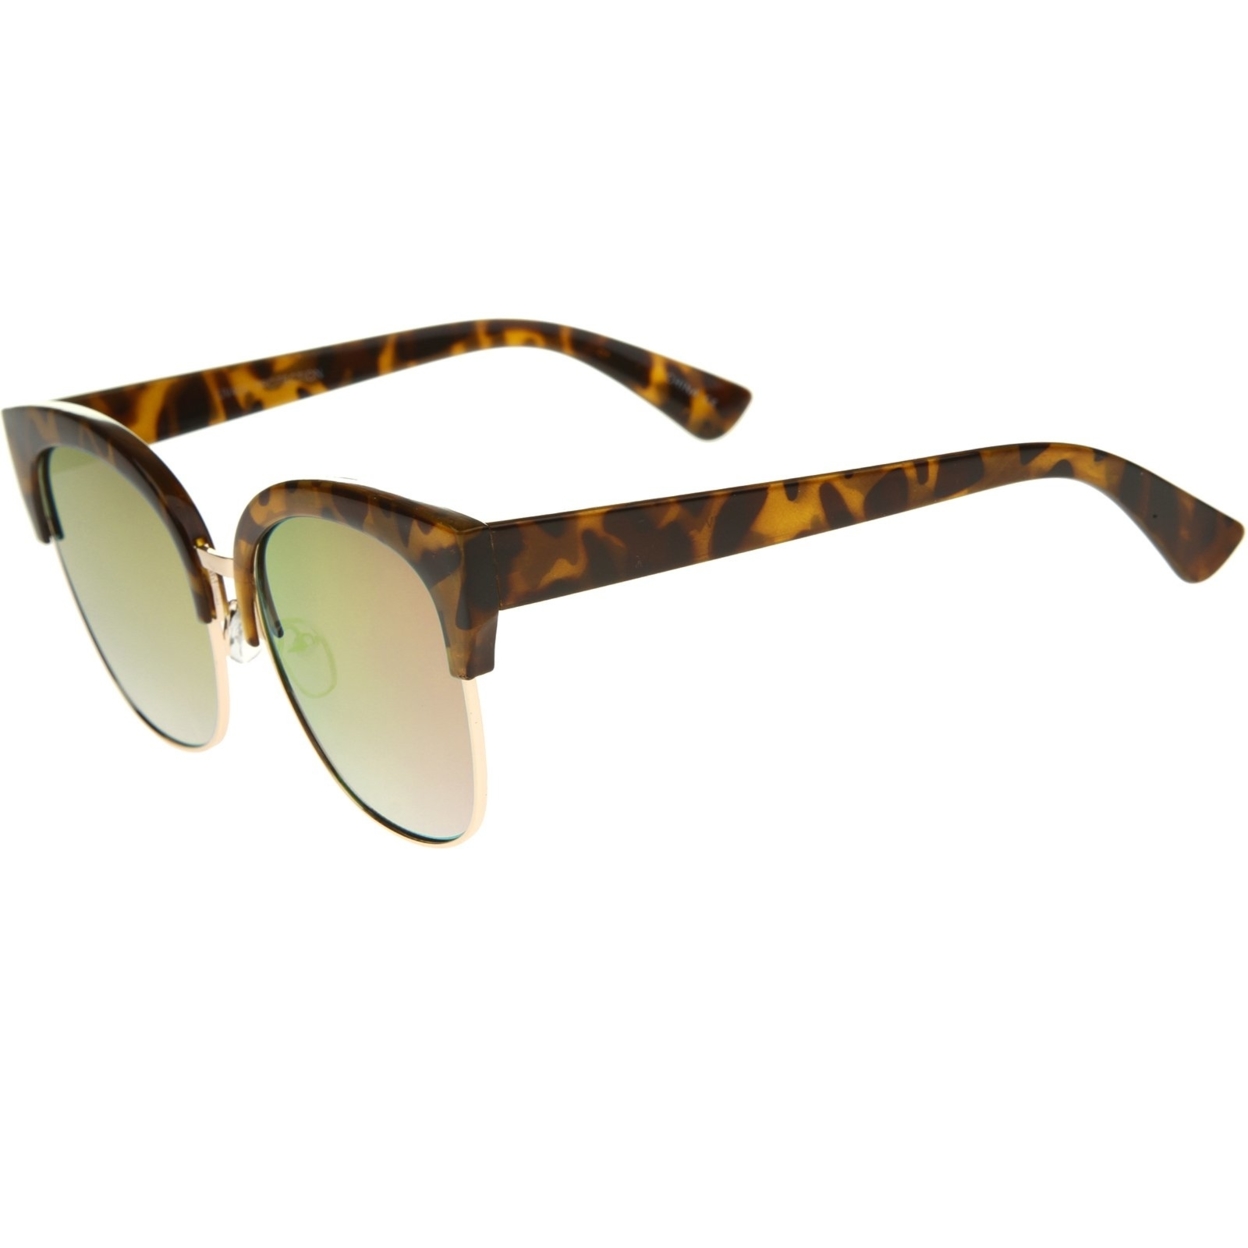 Modern Oversized Half-Frame Color Mirror Flat Lens Cat Eye Sunglasses 58mm - Tortoise / Magenta Mirror